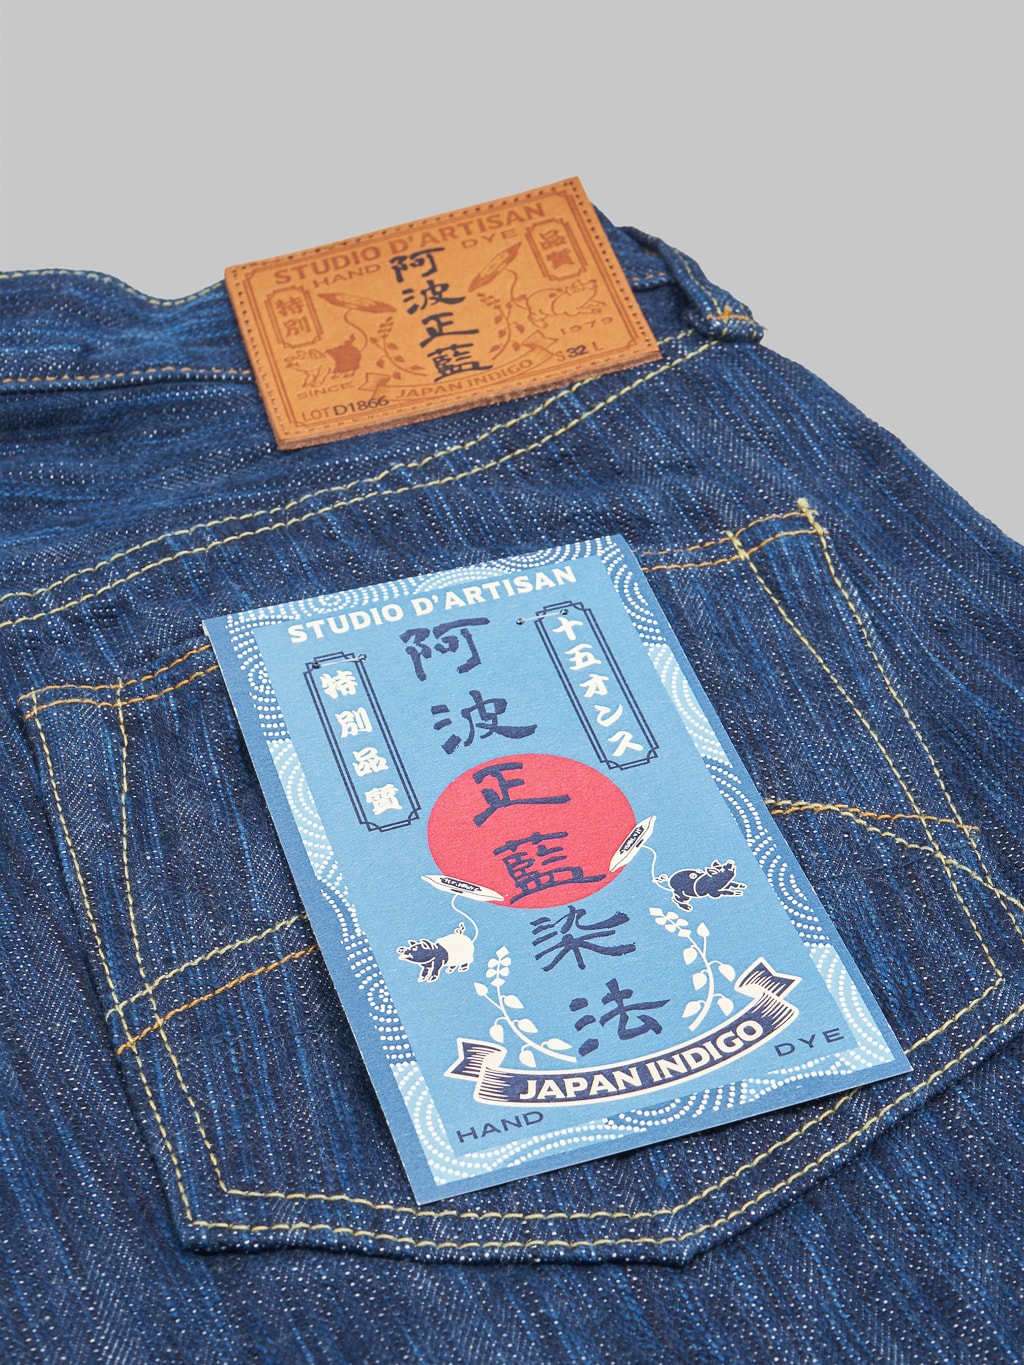 Studio dartisan tokushima awa shoai regular straight jeans pocket flasher